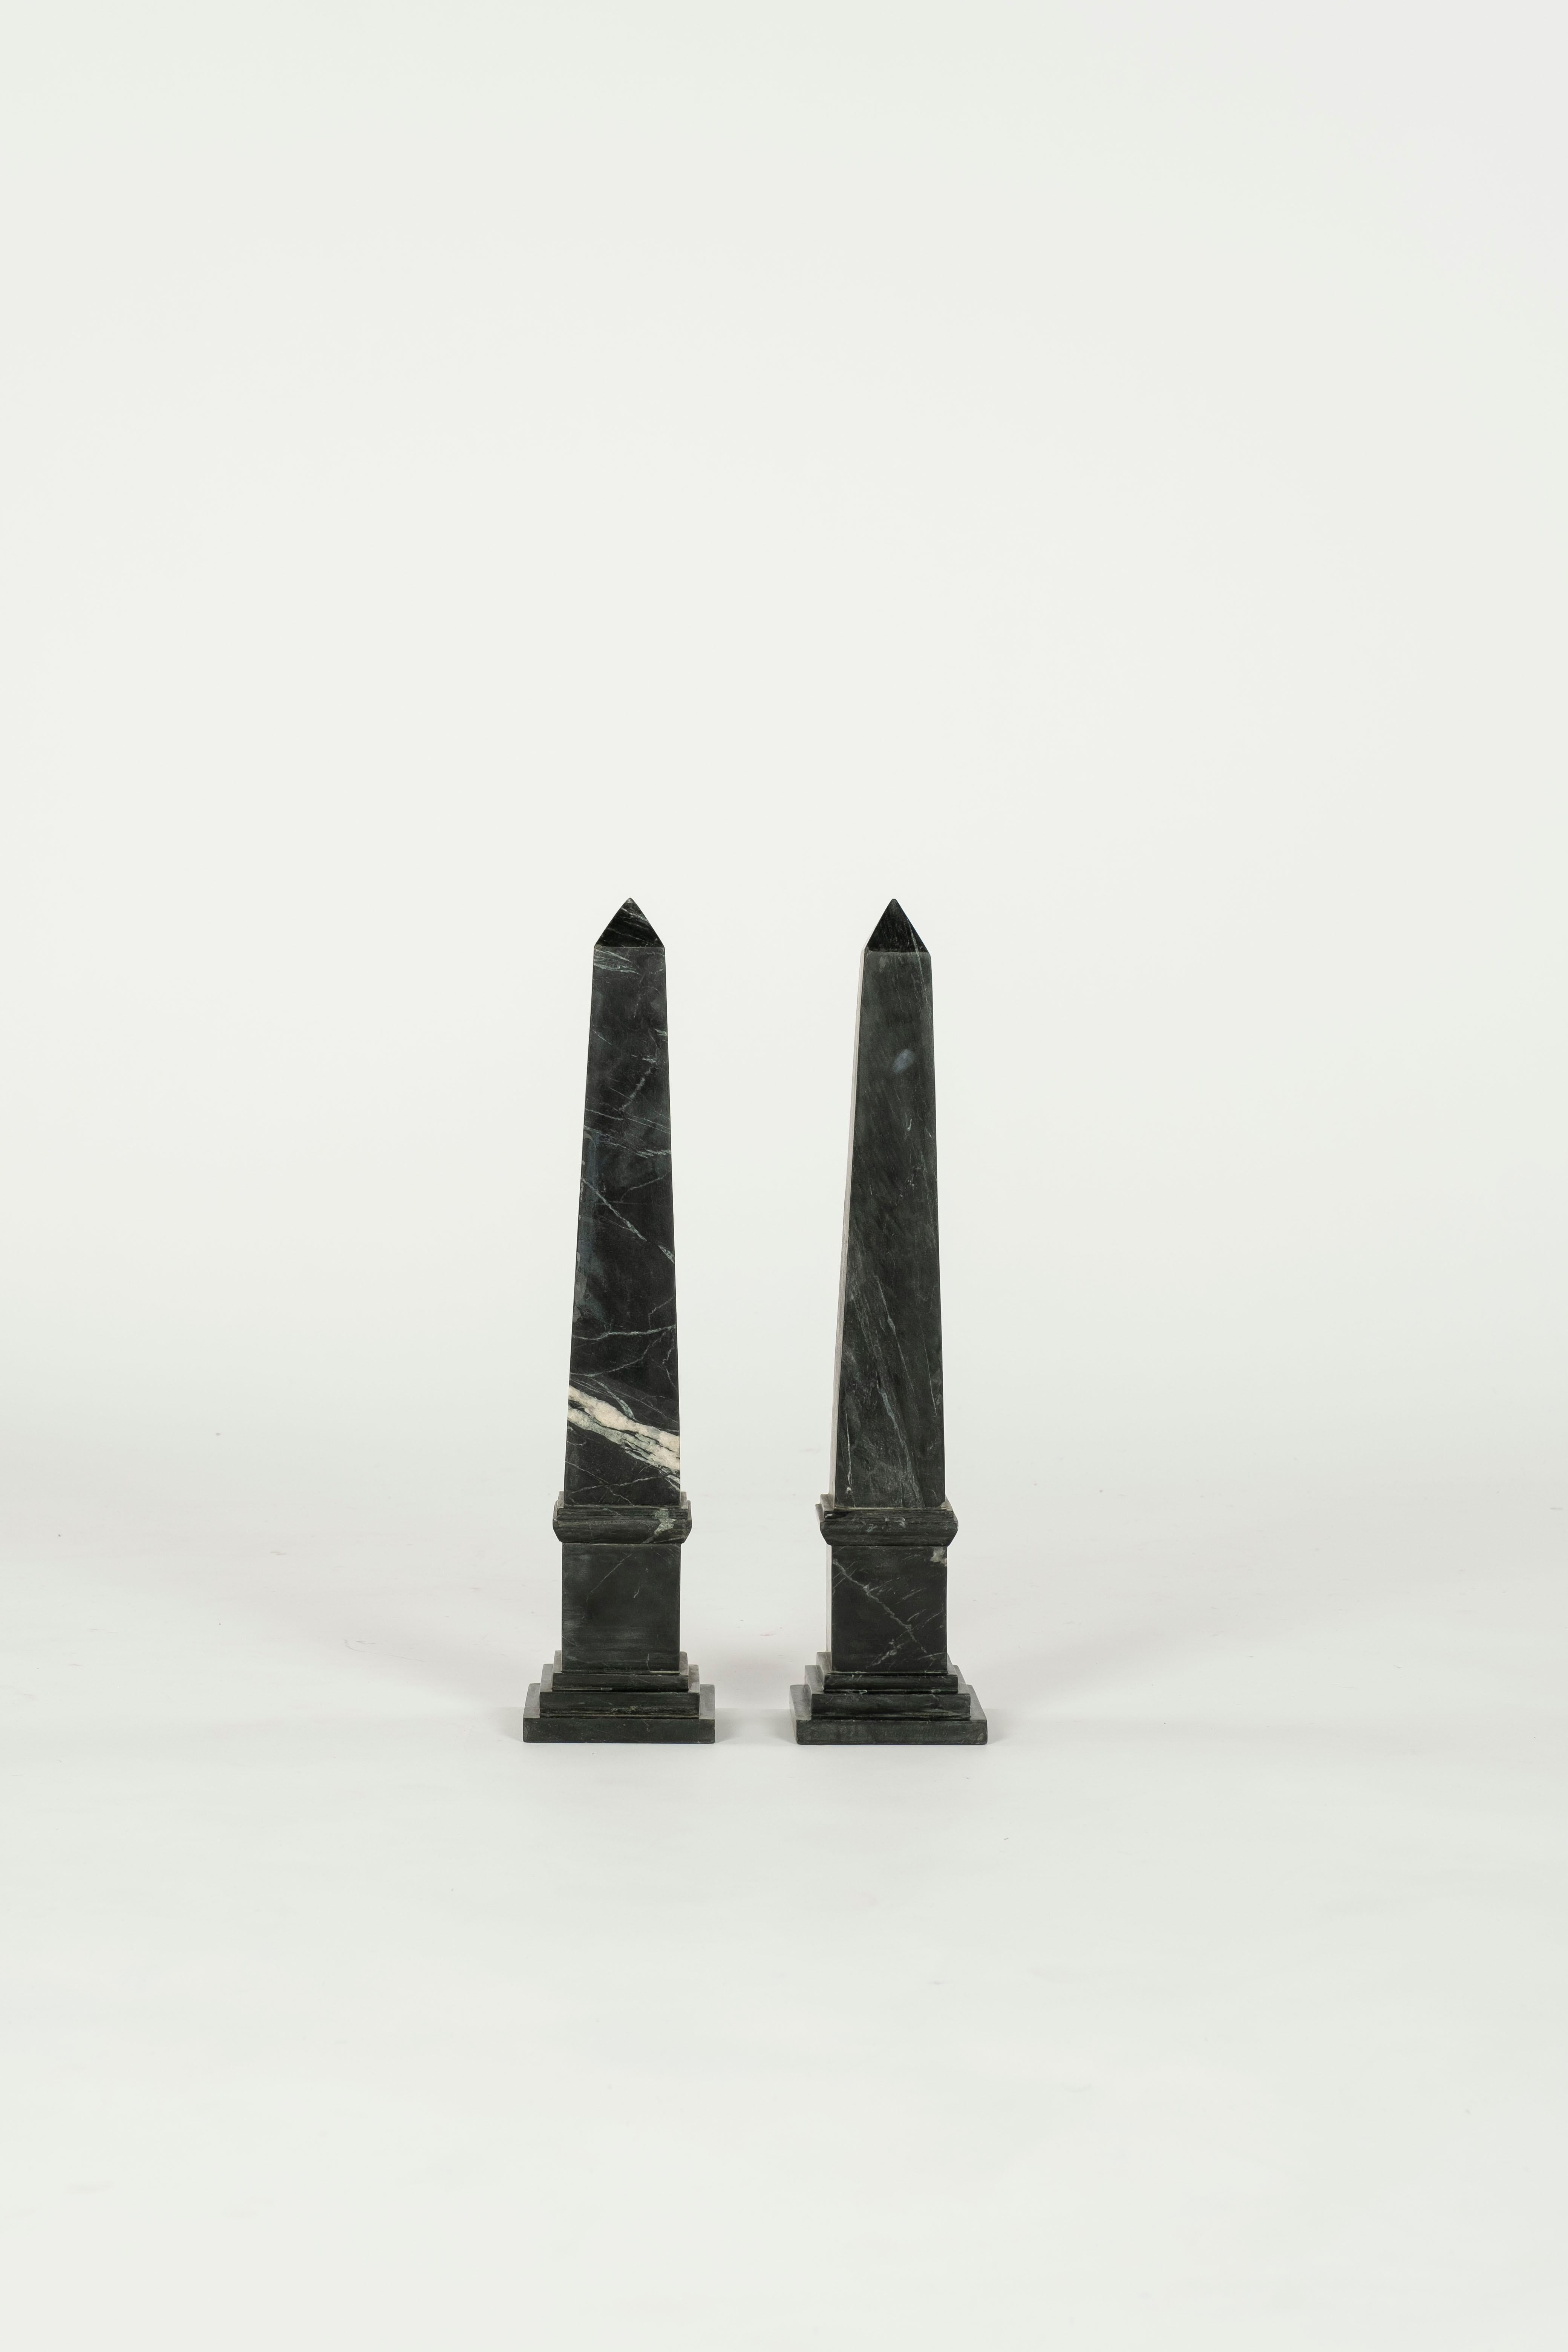 Schönes Paar Obelisken aus schwarzem Marmor.